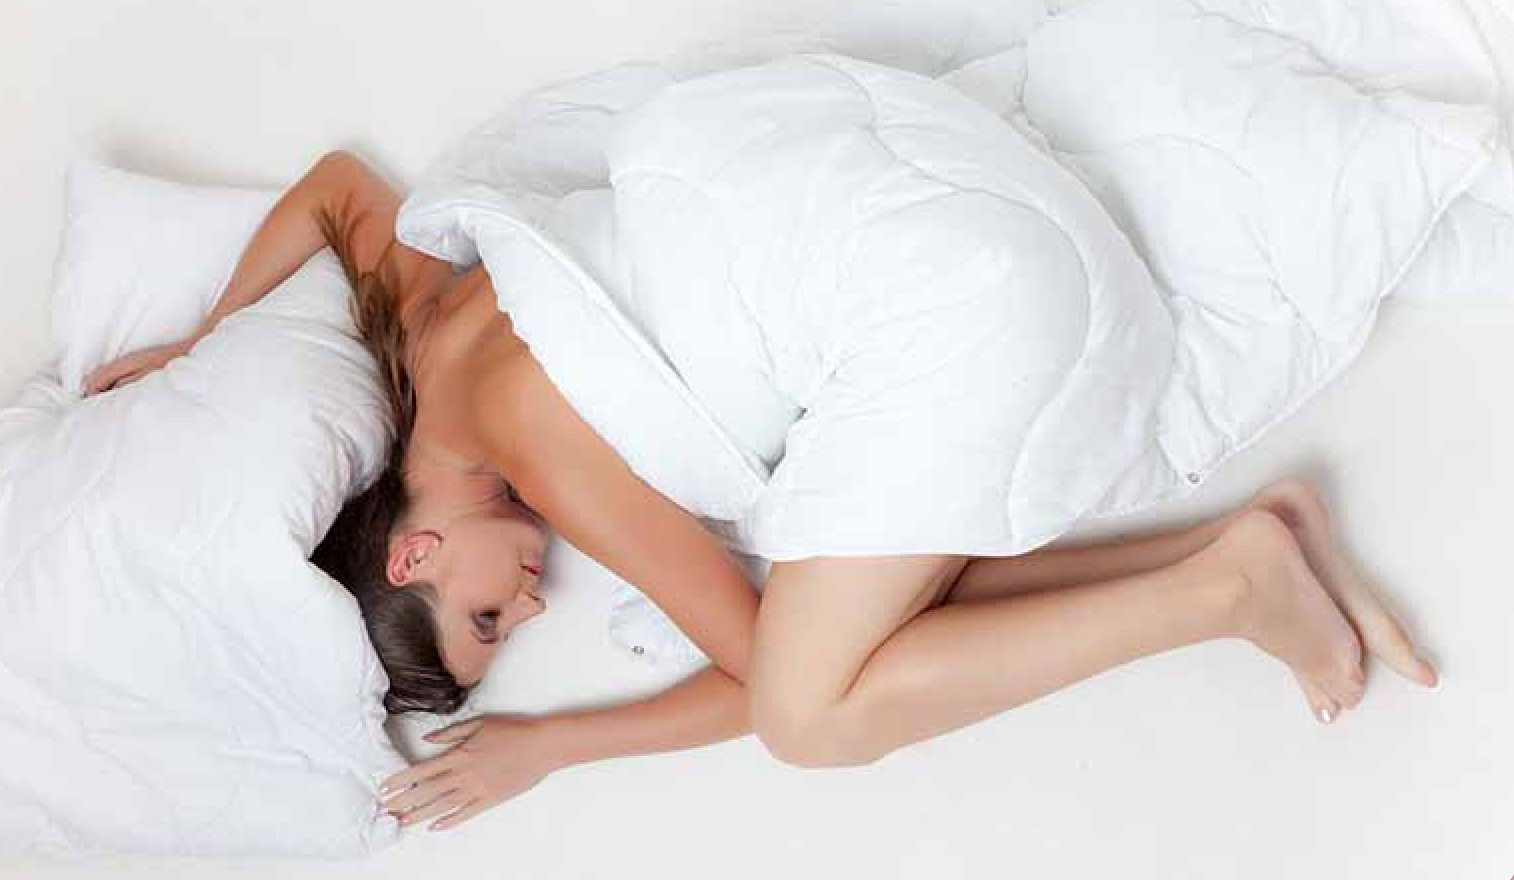 Rellenos o edredones nórdicos: belleza y confort al dormir - Trucos de hogar